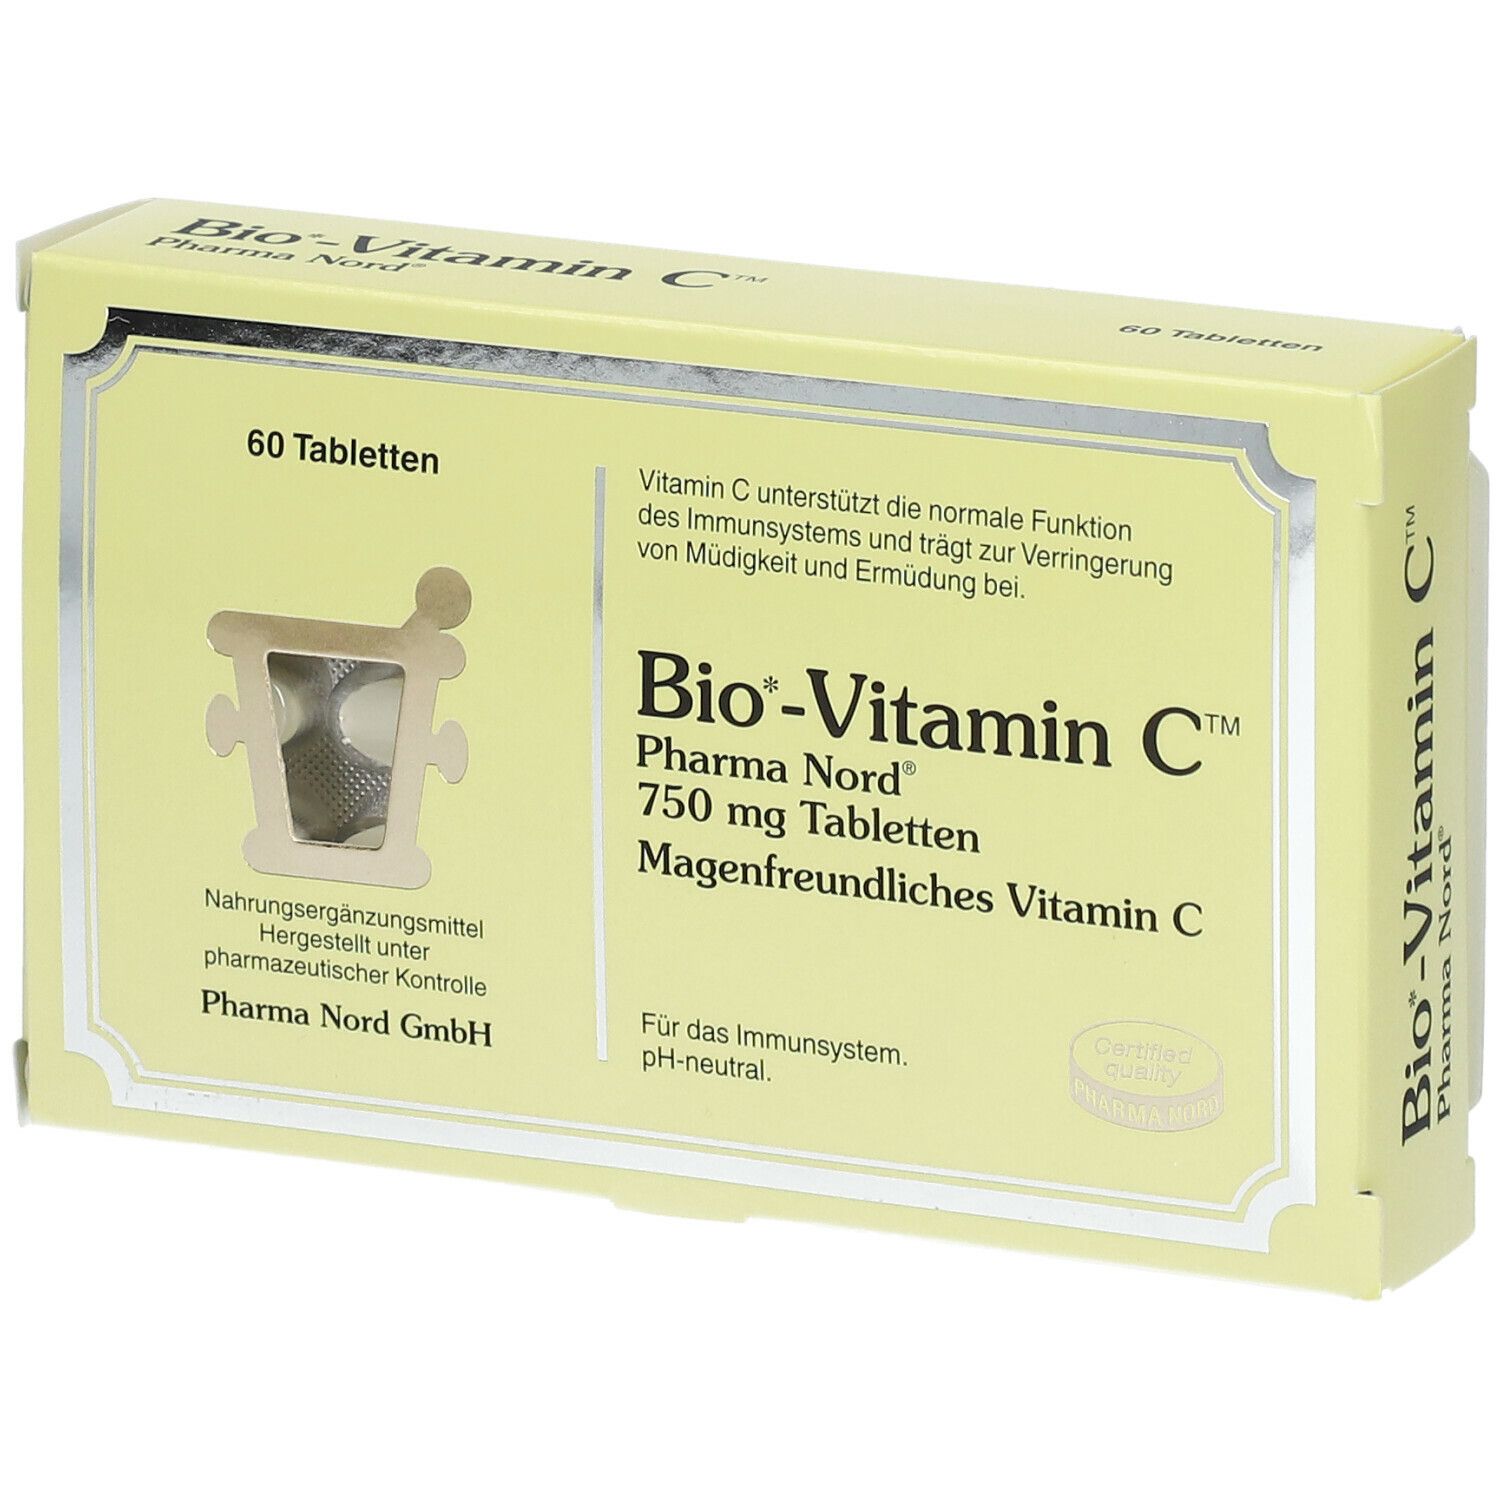 Bio®-Vitamin C Pharma Nord